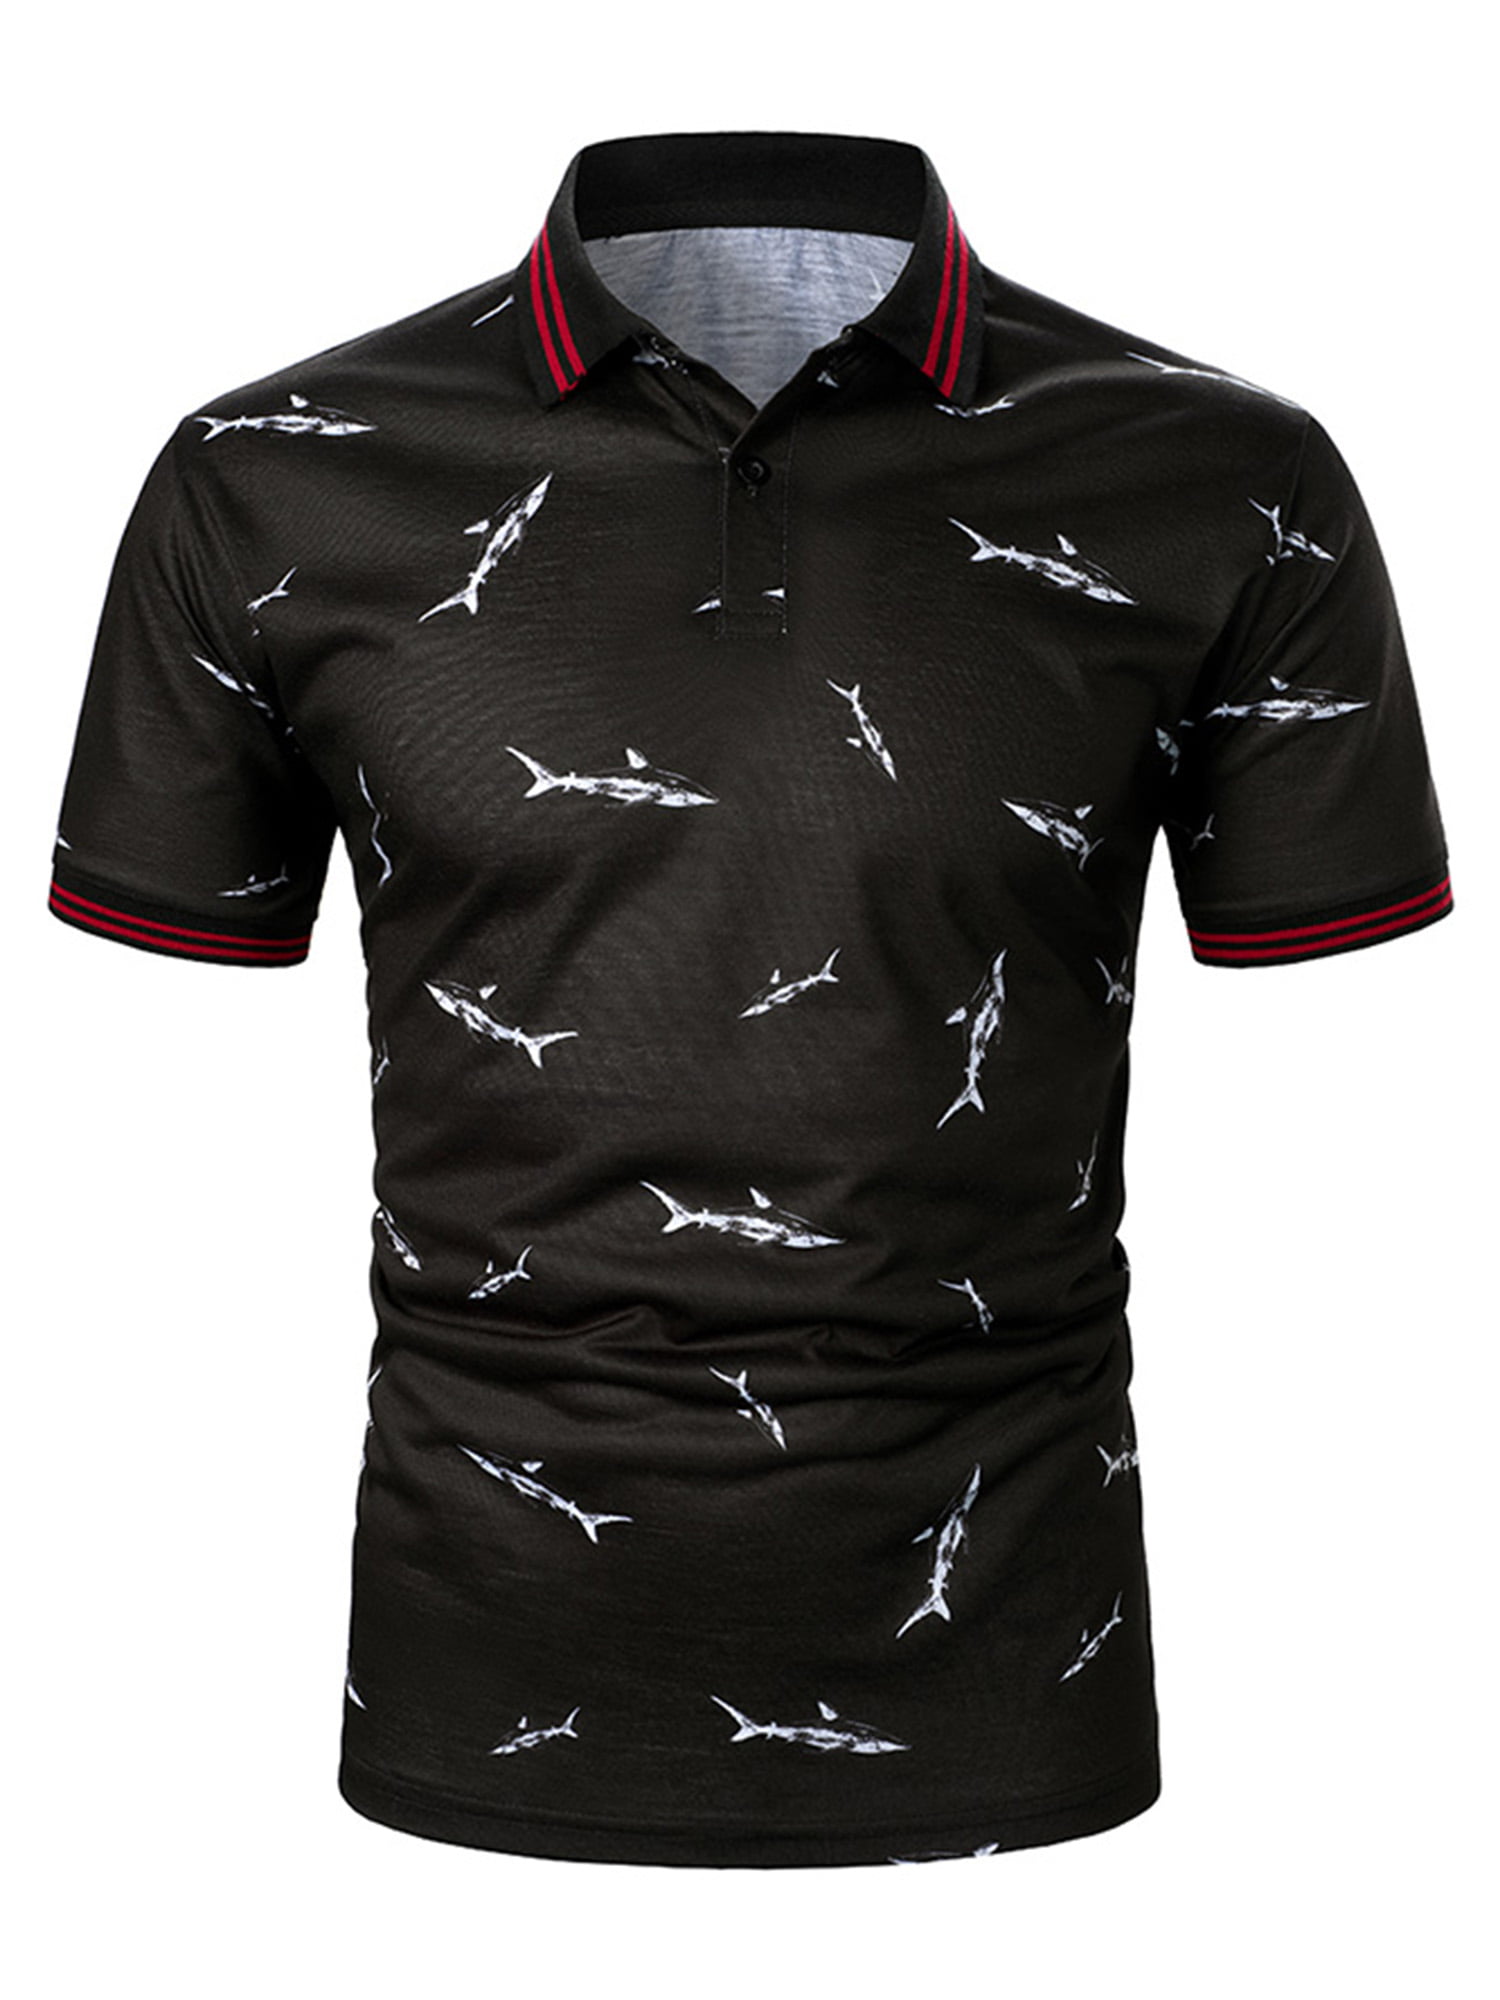 Mfasica Mens Hit Color Short Sleeve Stripes Causal Polo Shirt T-Shirt Top 